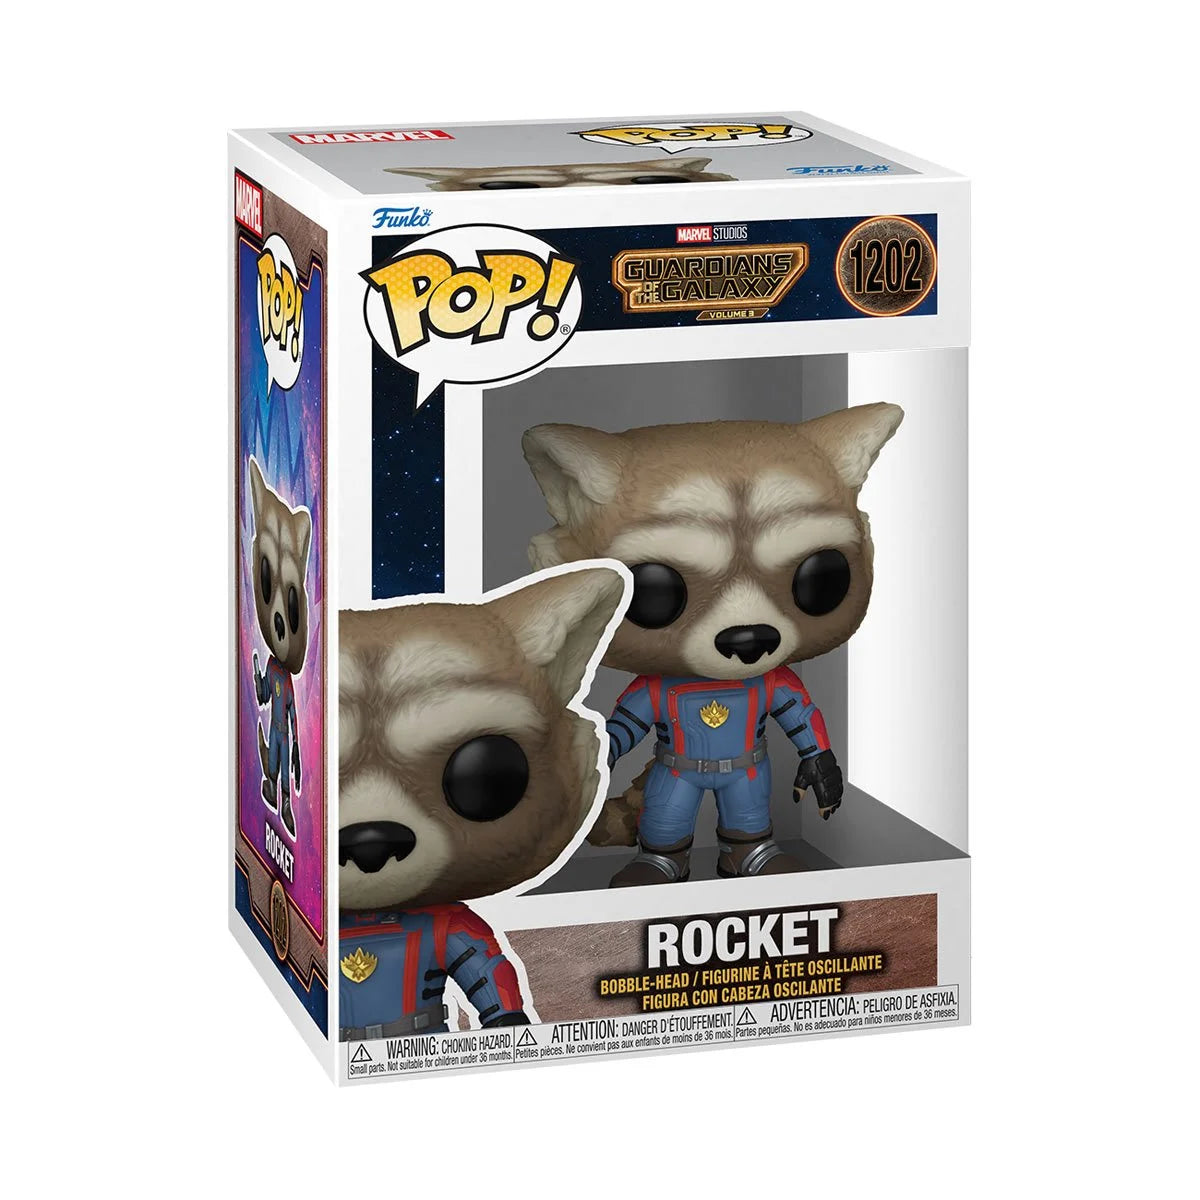 Rocket Guardians of the Galaxy Volume 3 Pop! Vinyl Figure